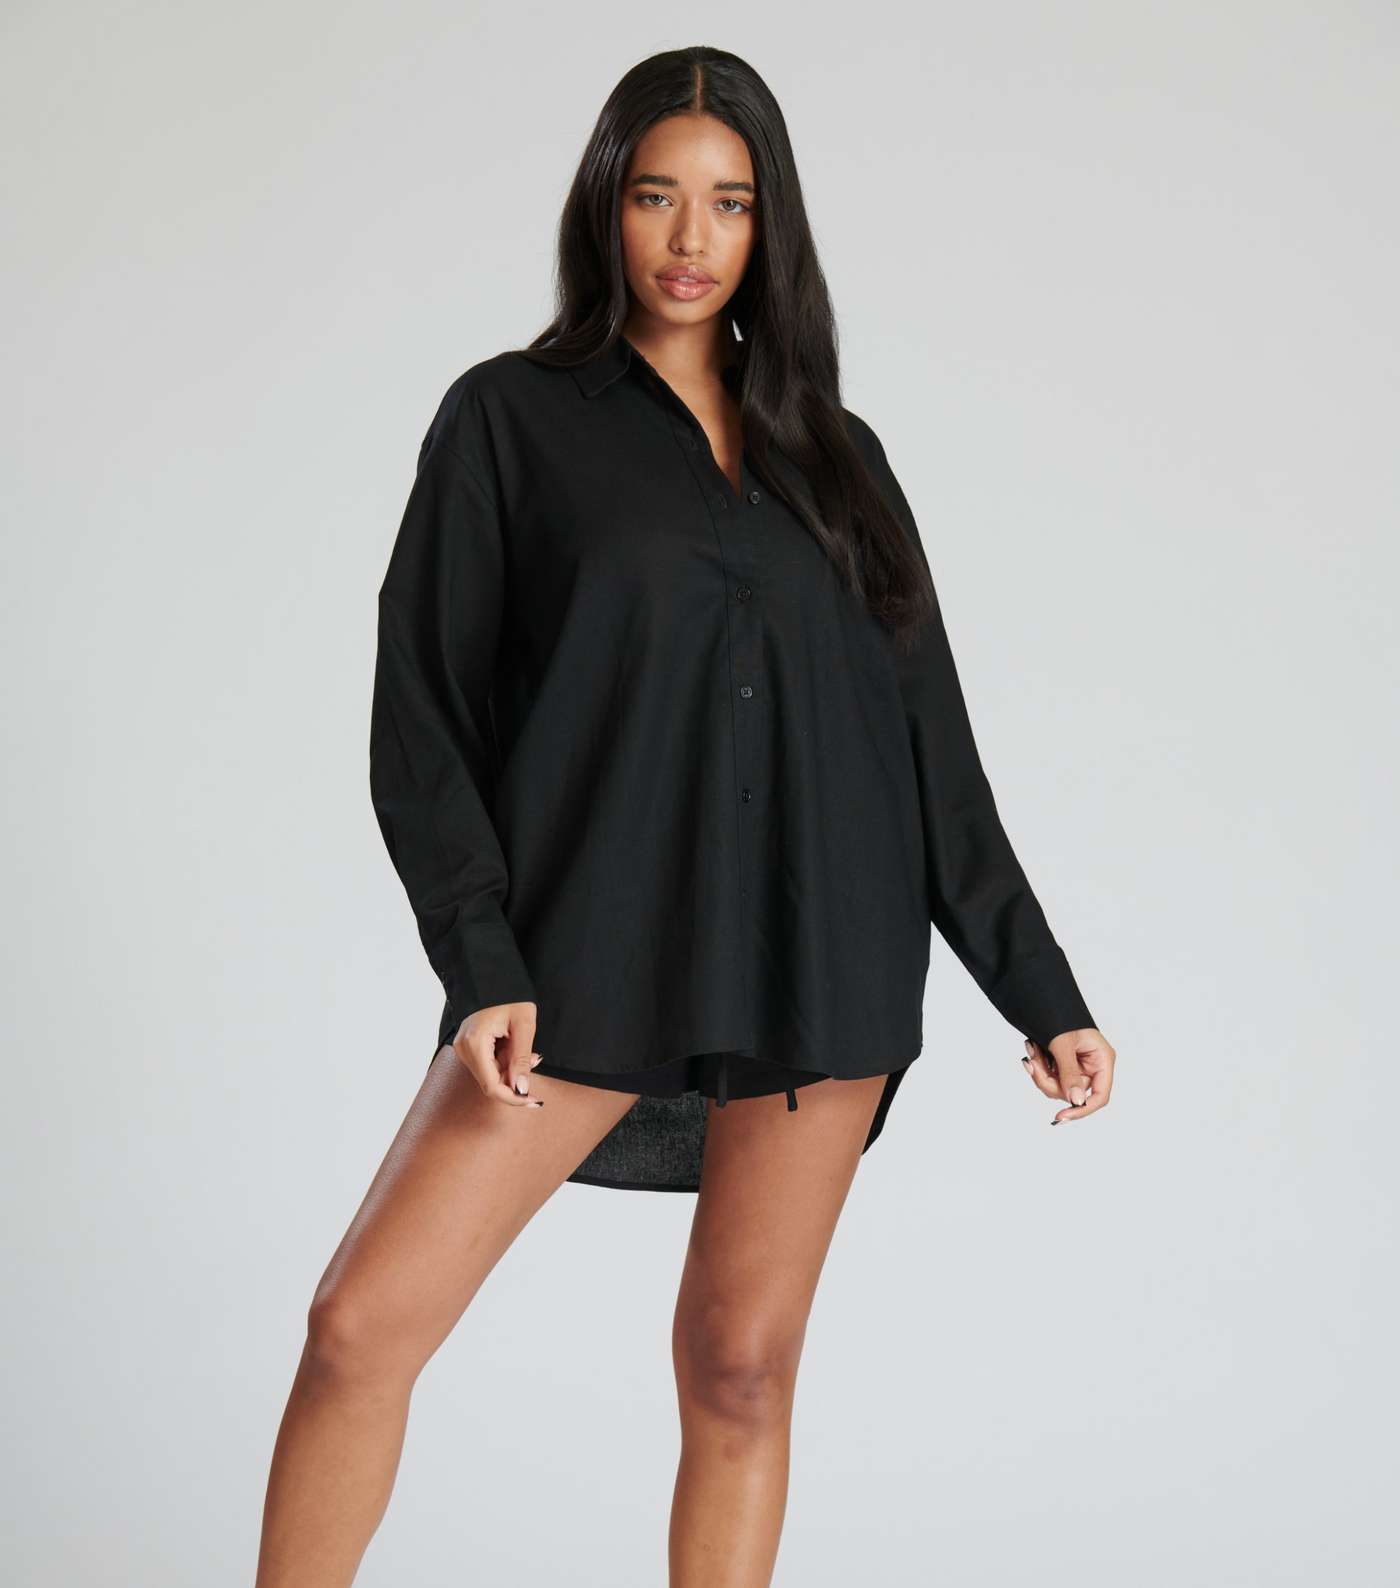 South Beach Black Linen-Look Oversized Shirt Image 2